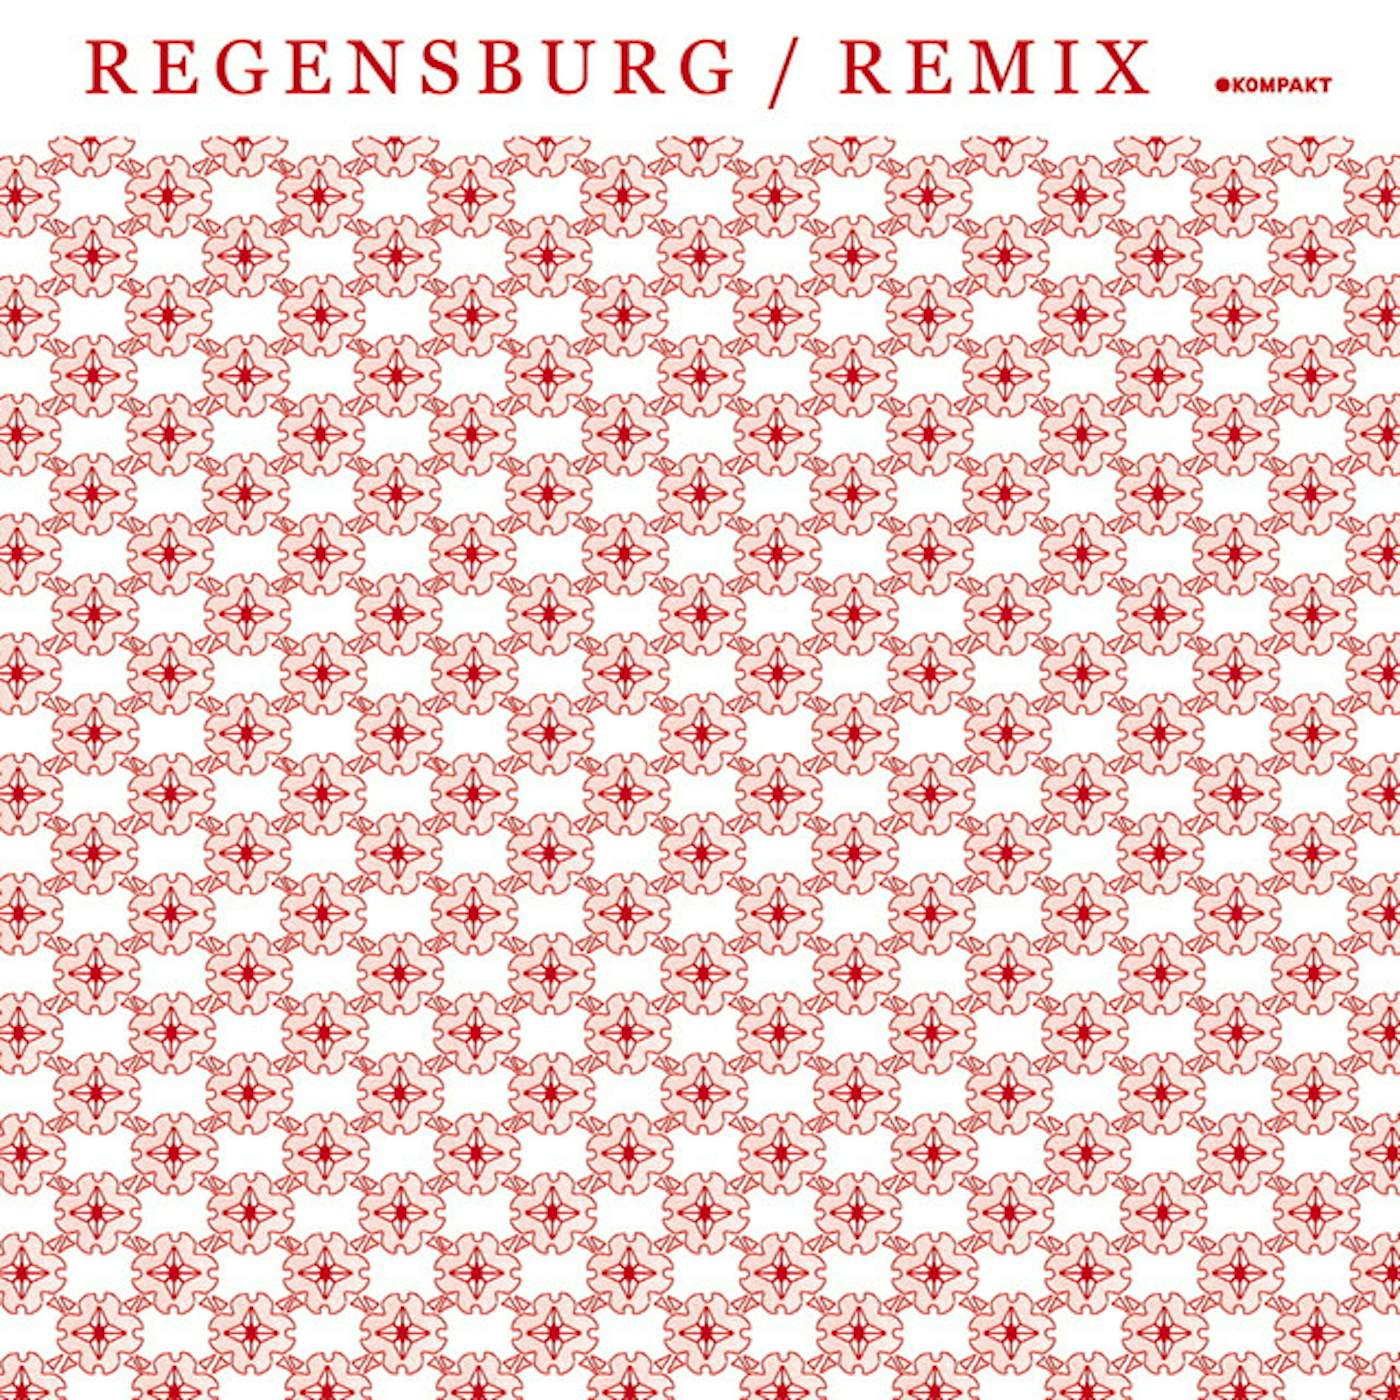 Markus Guentner REGENSBURG / REMIX Vinyl Record